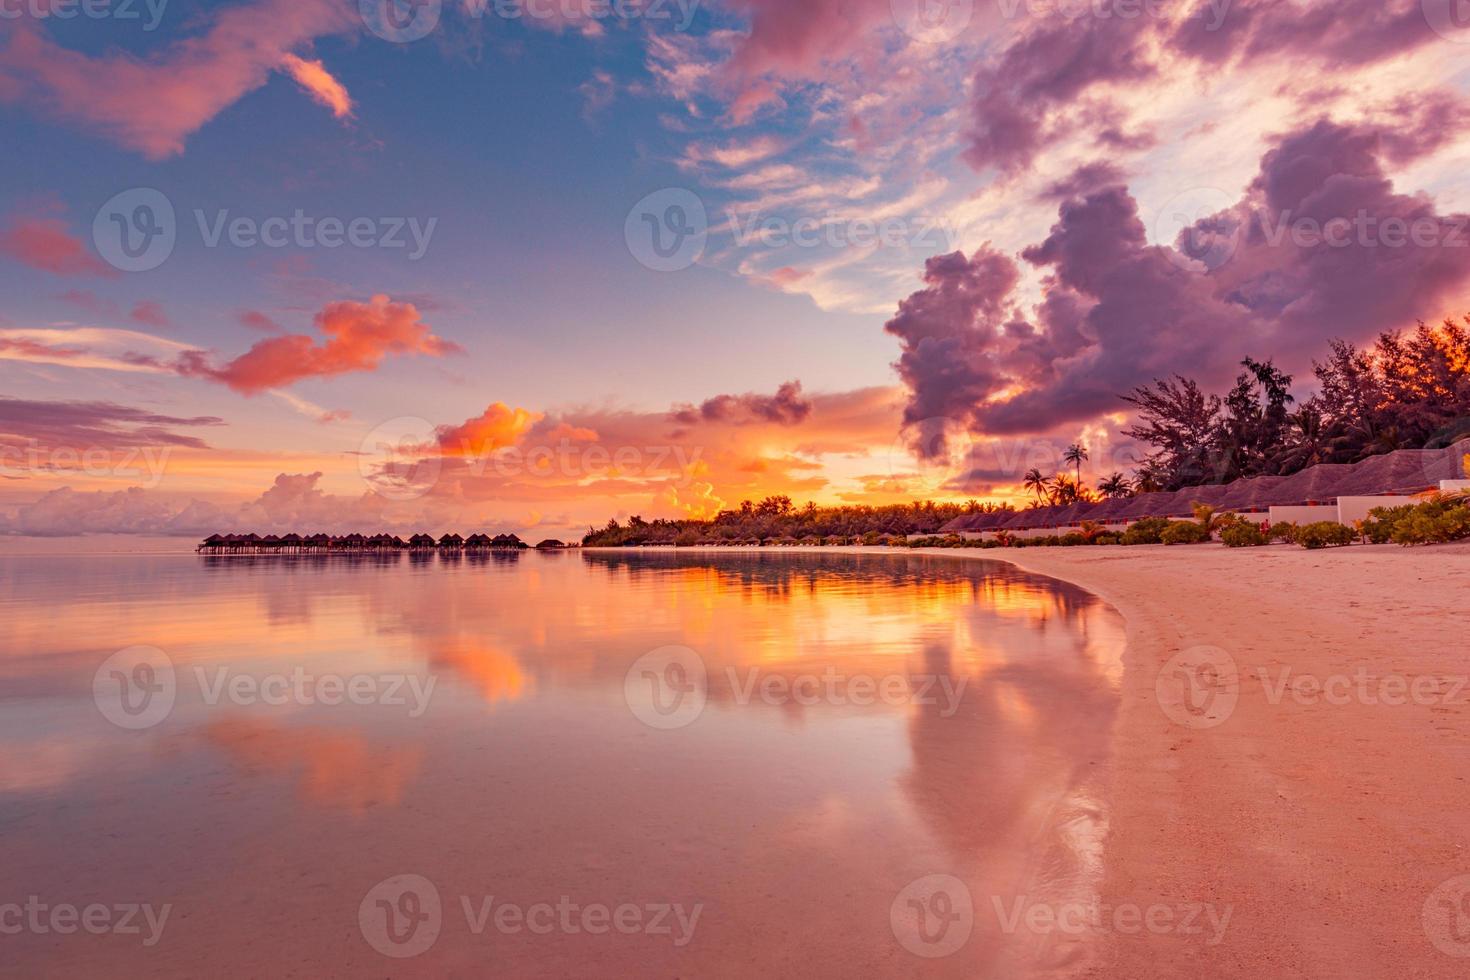 mooi detailopname kalmte zee water golven droom zonsopkomst zonsondergang. tropisch eiland strand landschap, exotisch panoramisch kust kust. zomer vakantie vakantie verbazingwekkend natuur. kom tot rust paradijs verbazingwekkend panorama foto